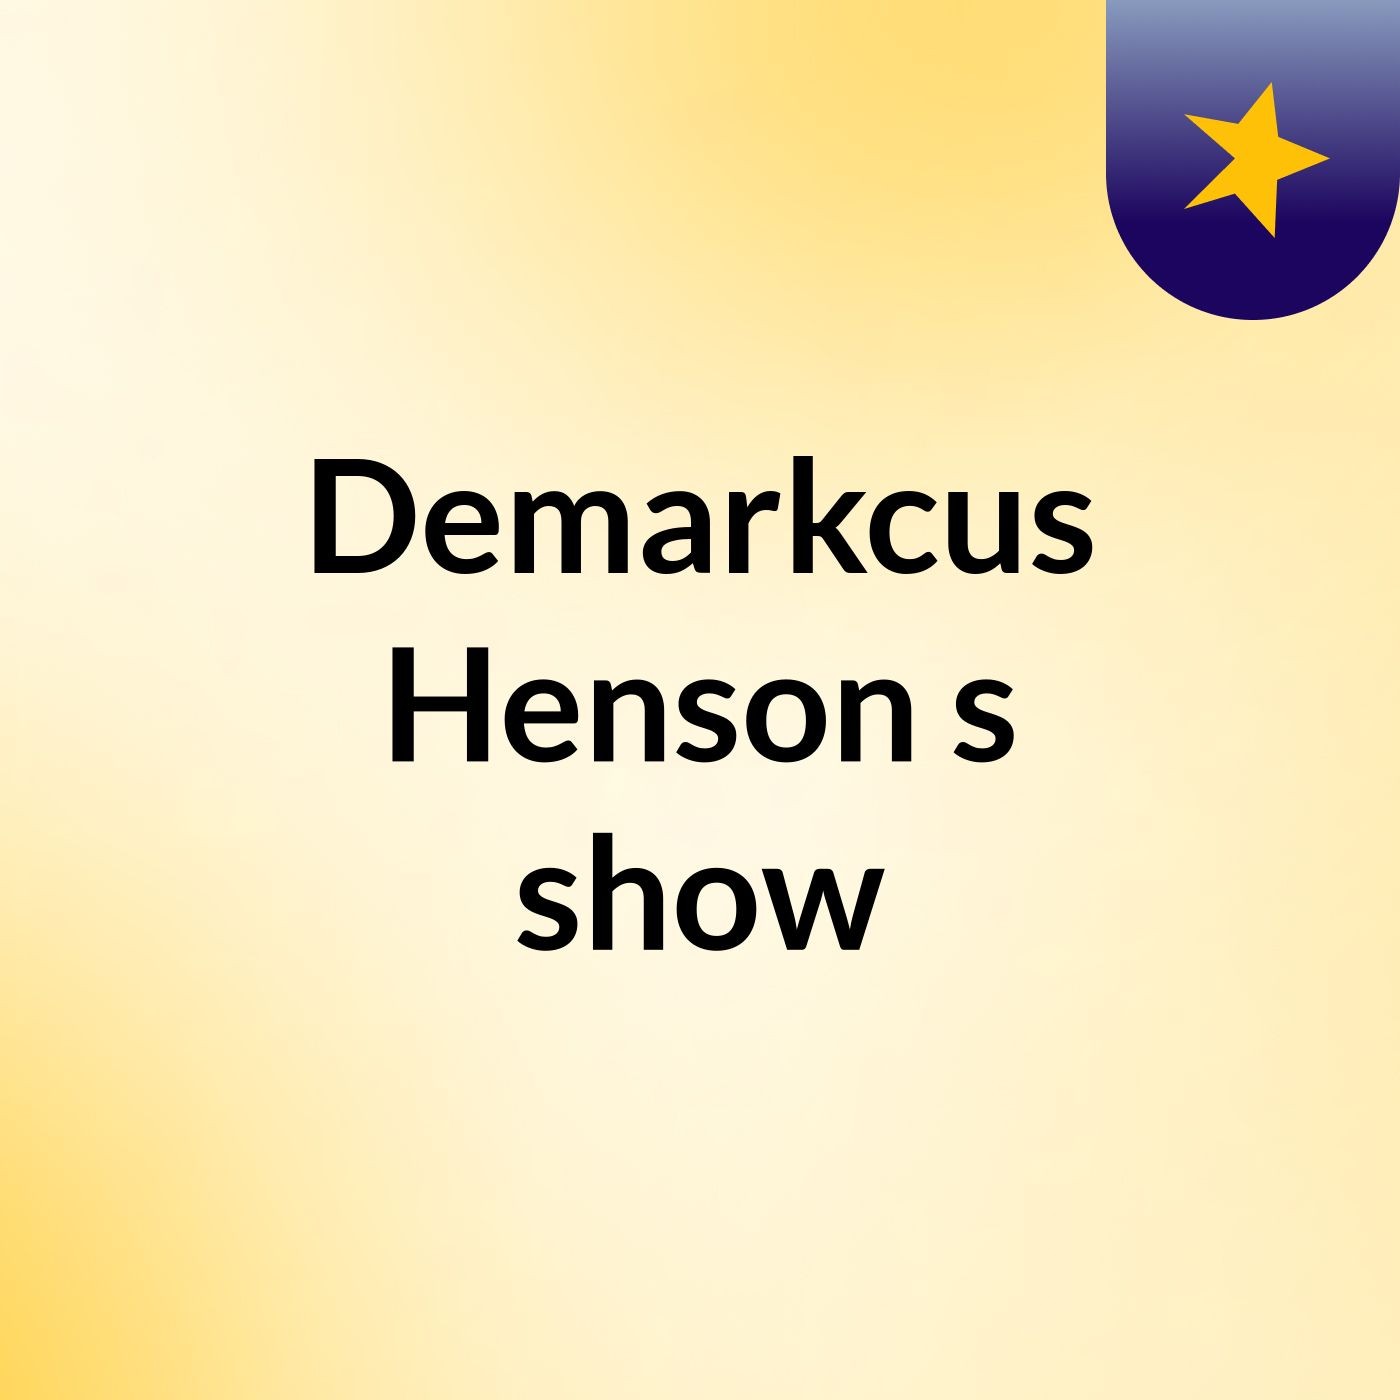 Episode 6 - Demarkcus Henson's show